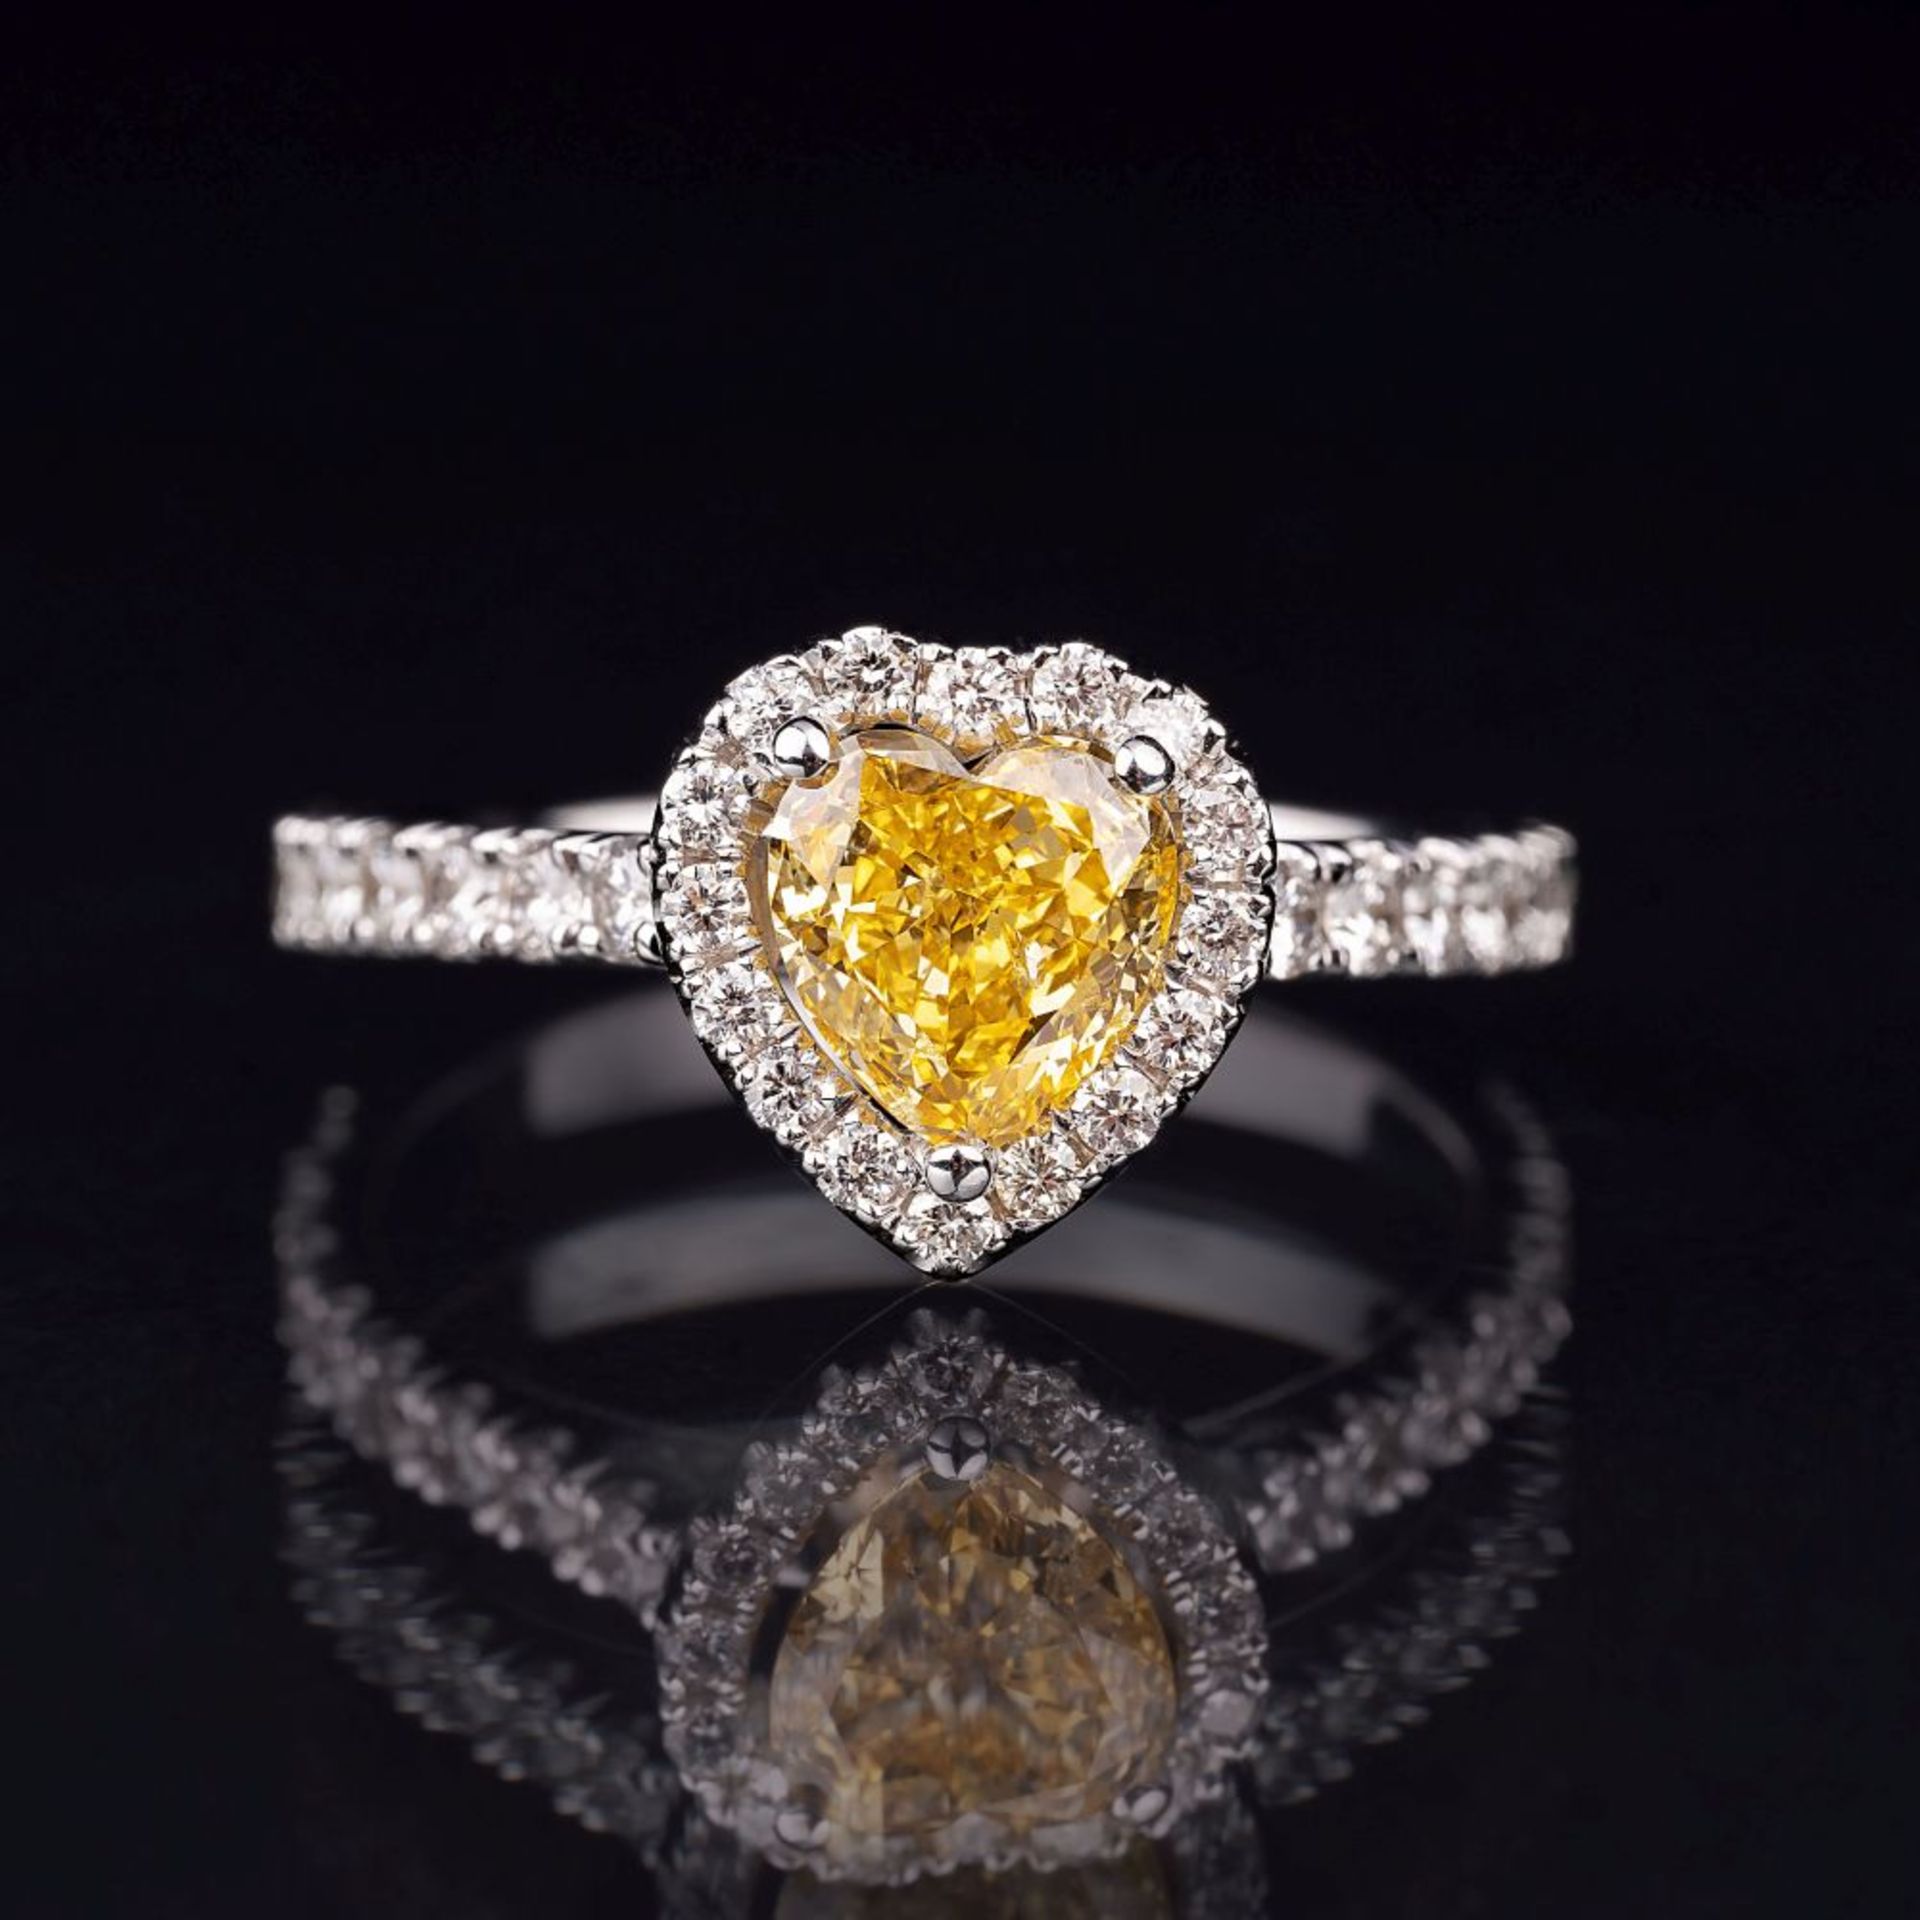 Herzförmiger Fancy Intense Diamant-Ring.